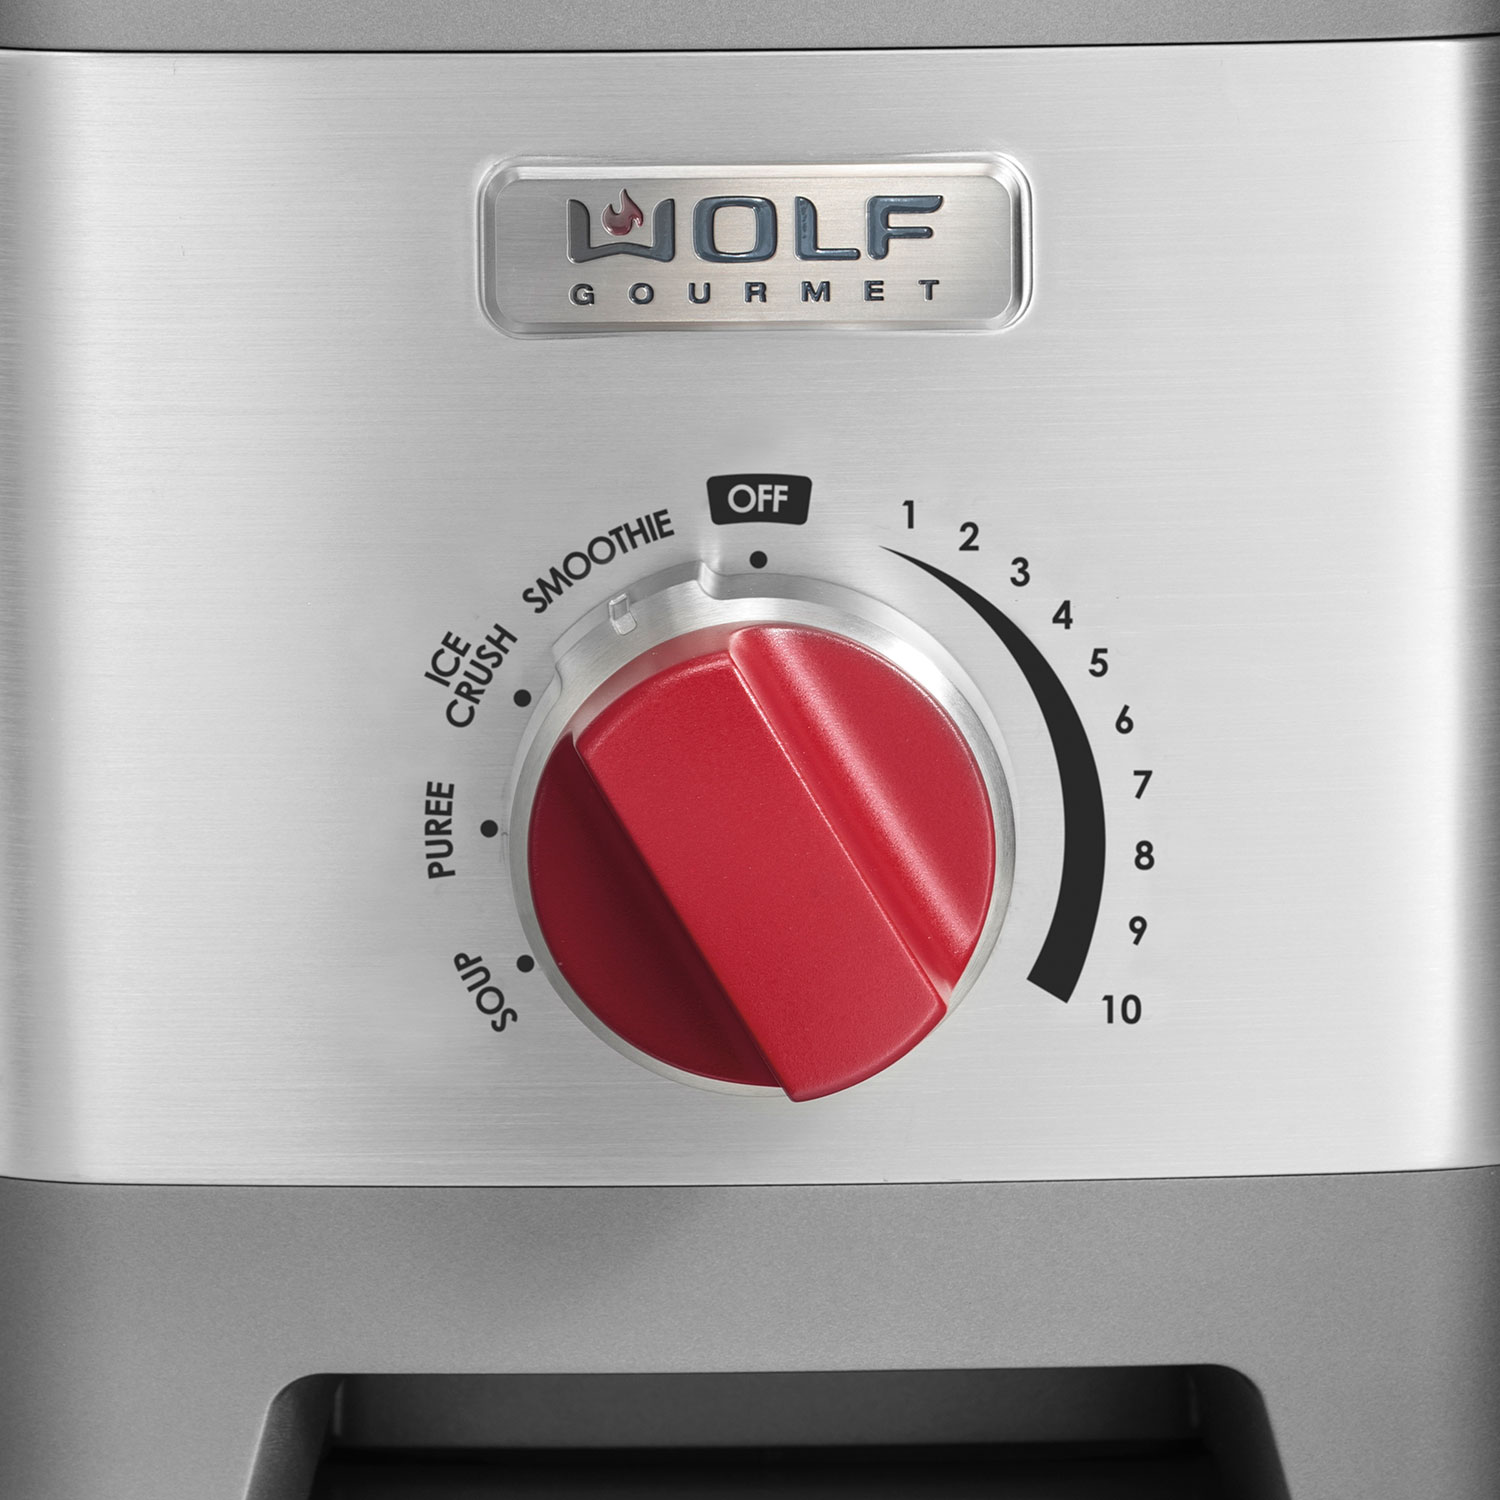 Wolf Gourmet 10 Speed 64oz. Countertop Blender & Reviews